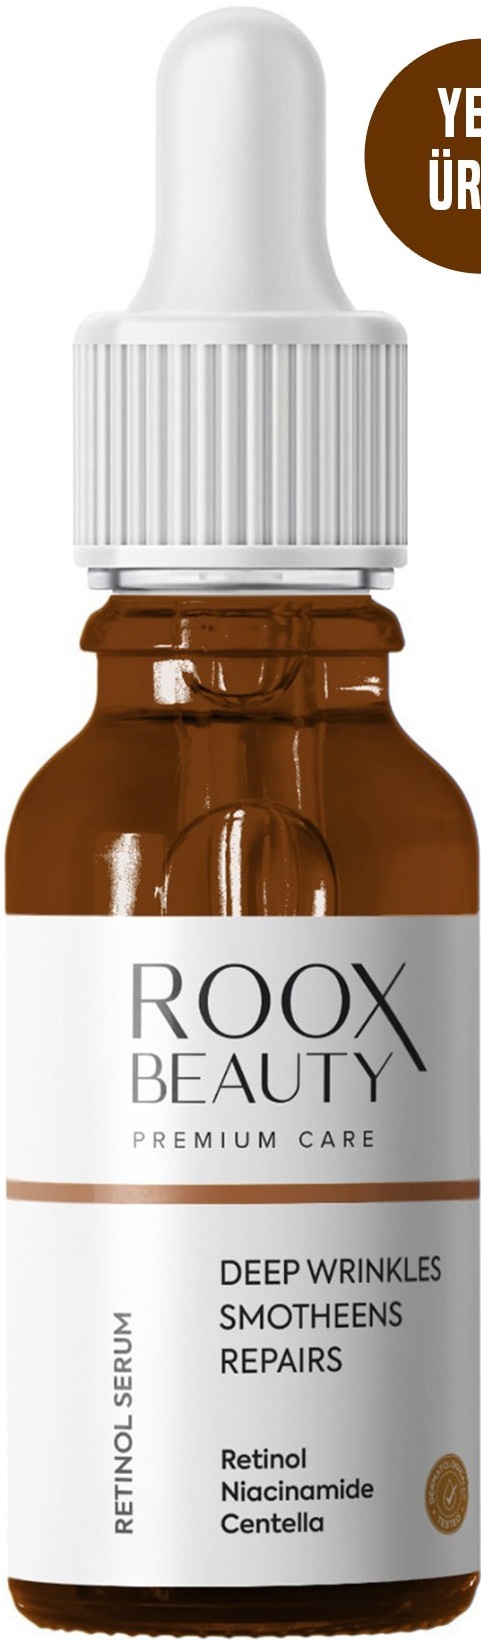 Roox Beauty Retinol Serum